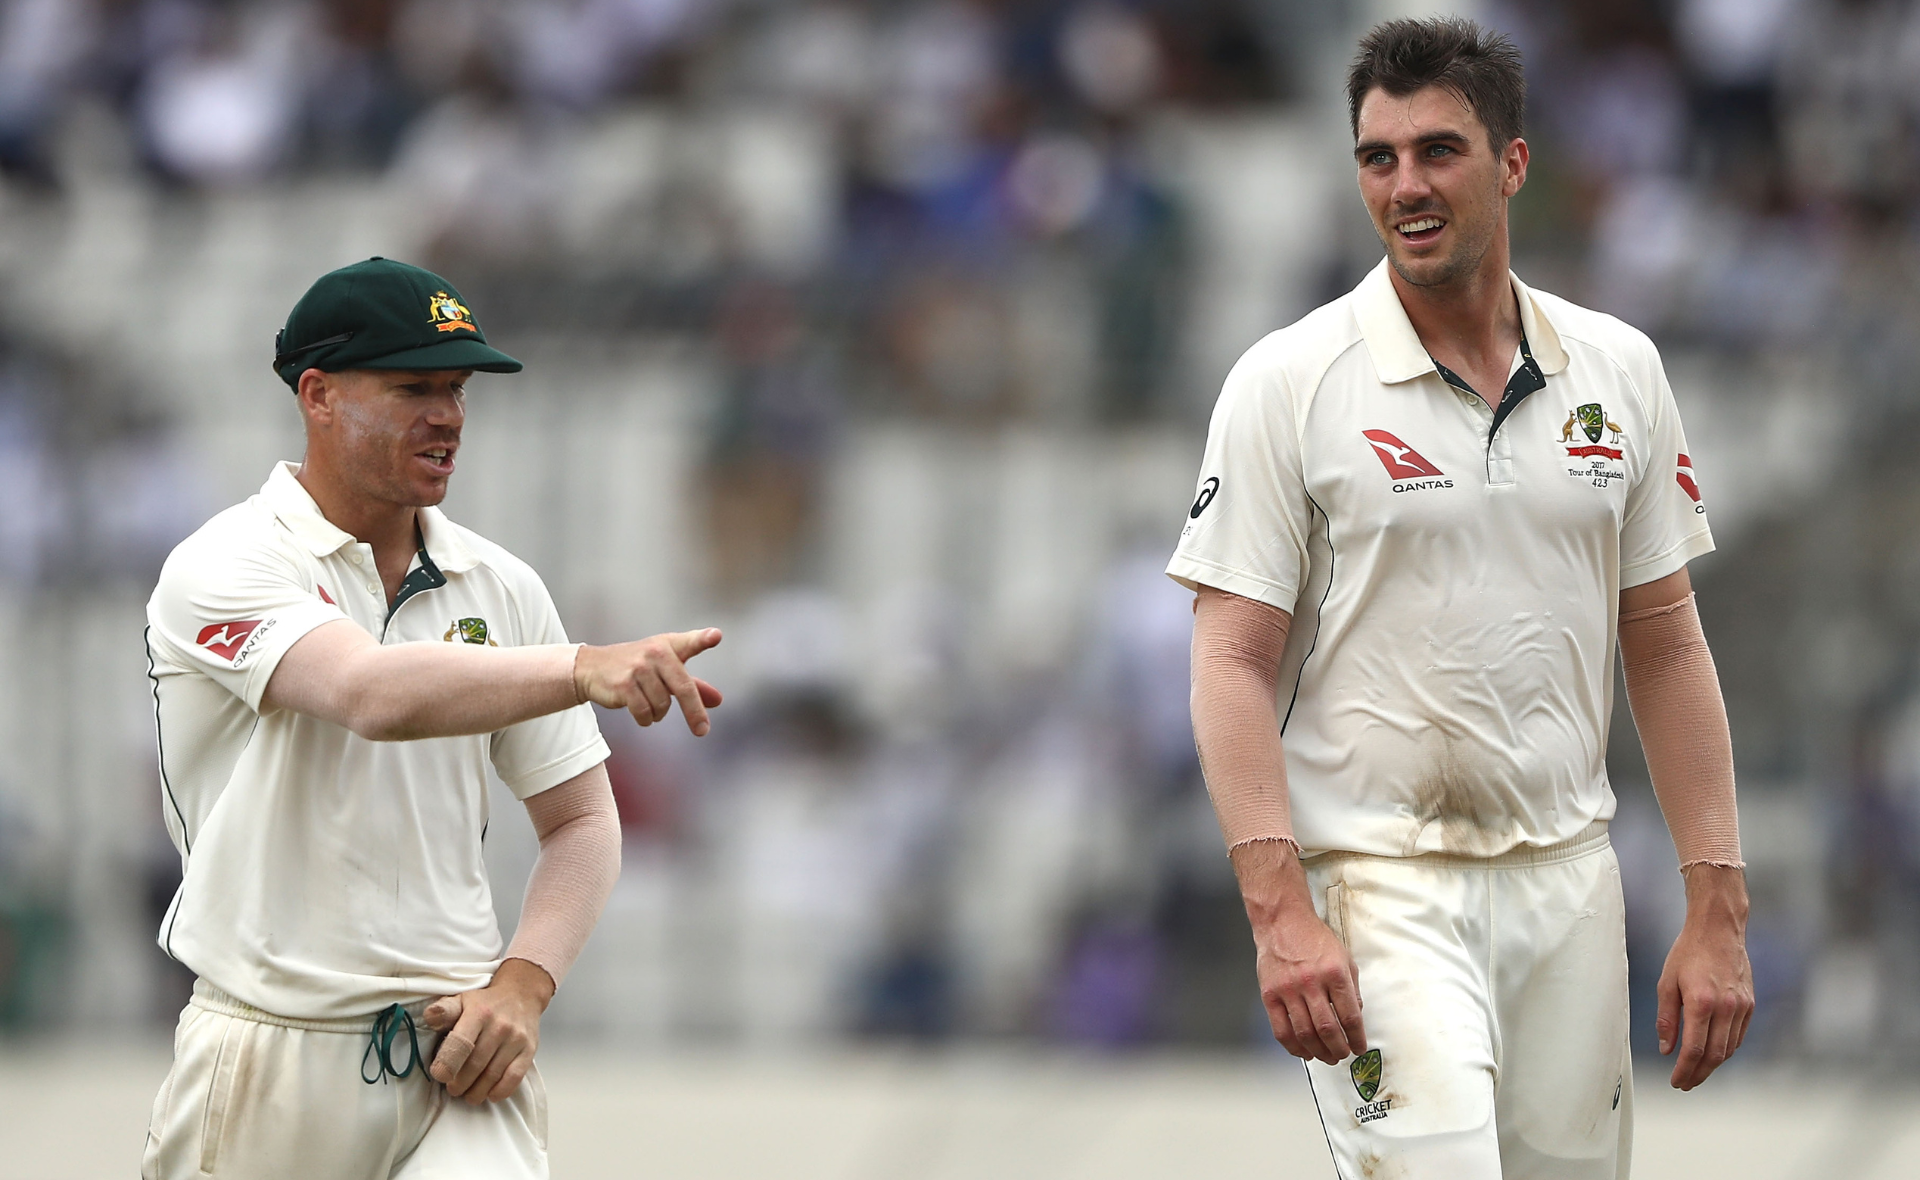 Tensions rise amidst rumoured rivalry between Australian cricket stars Pat Cummins and David Warner